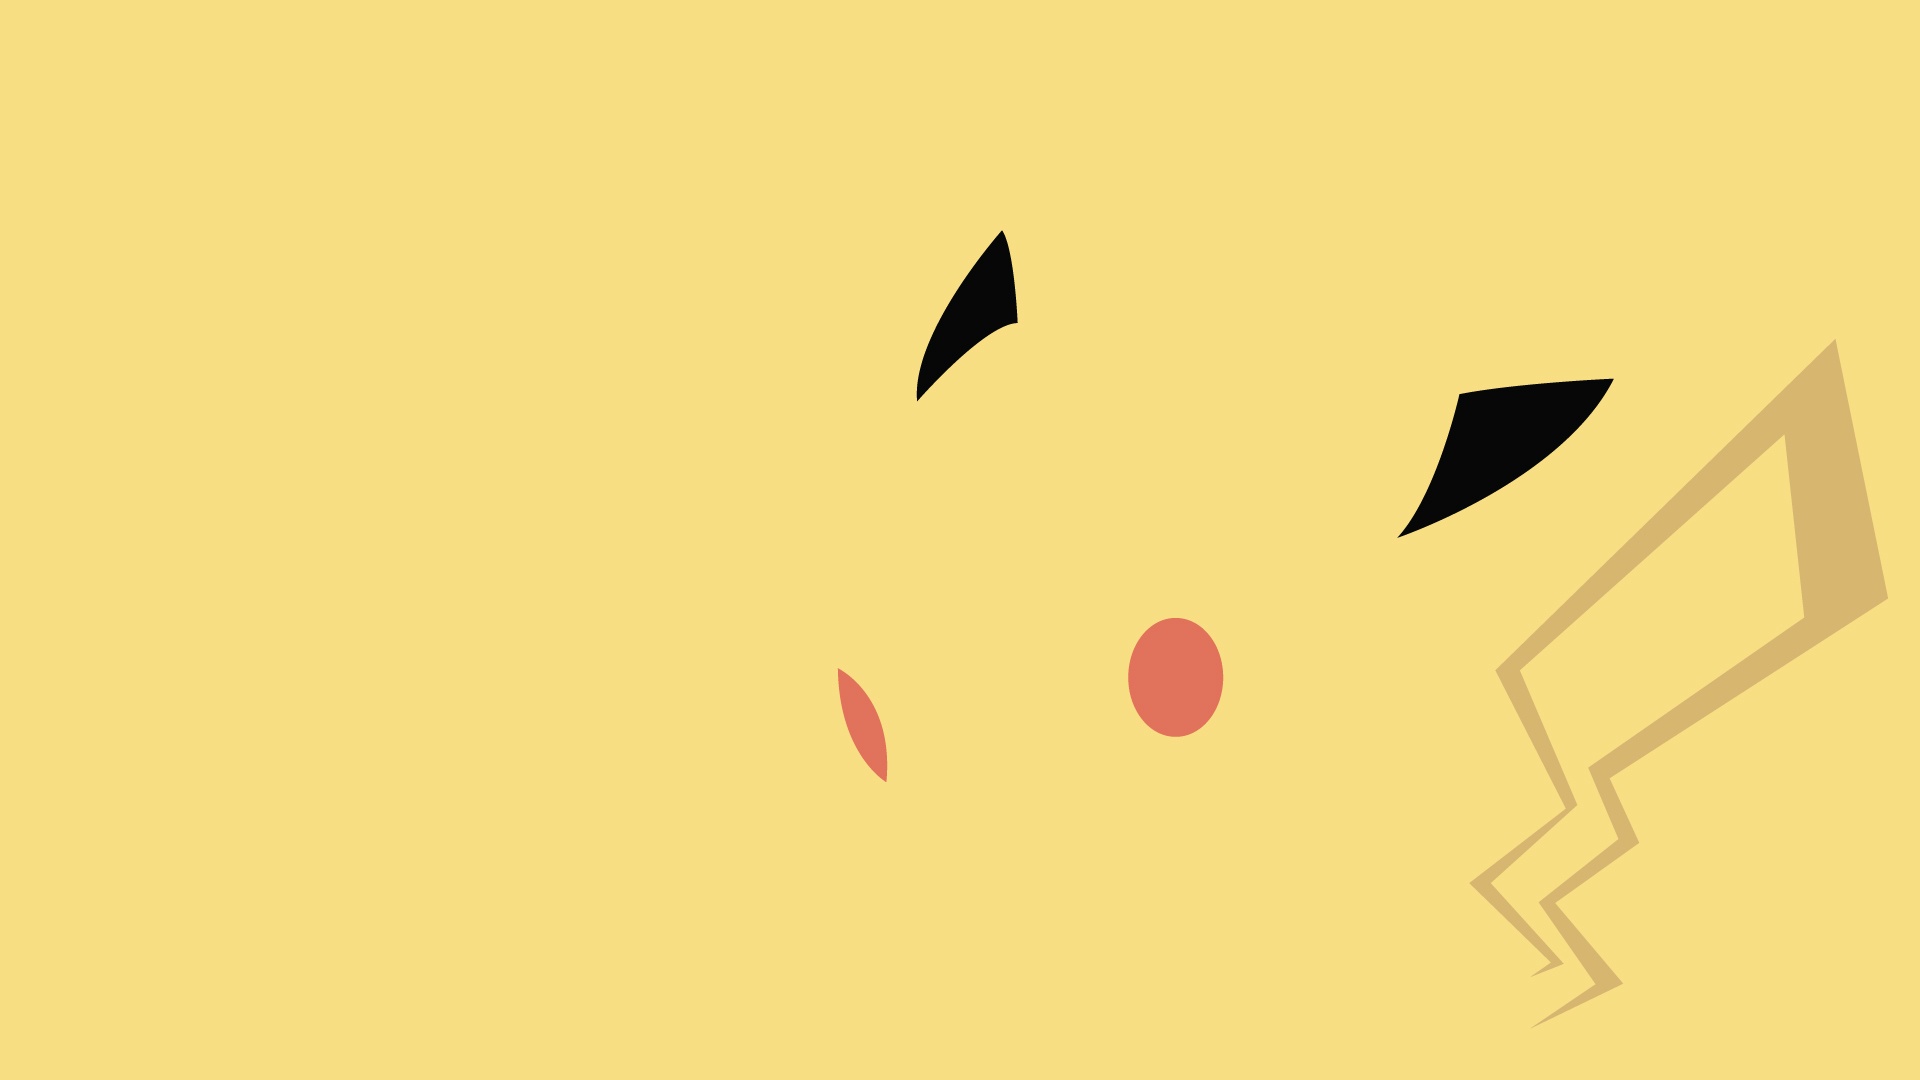 Wp Content Uploads Abstract Pokemon Pikachu Wallpaper HD Jpg